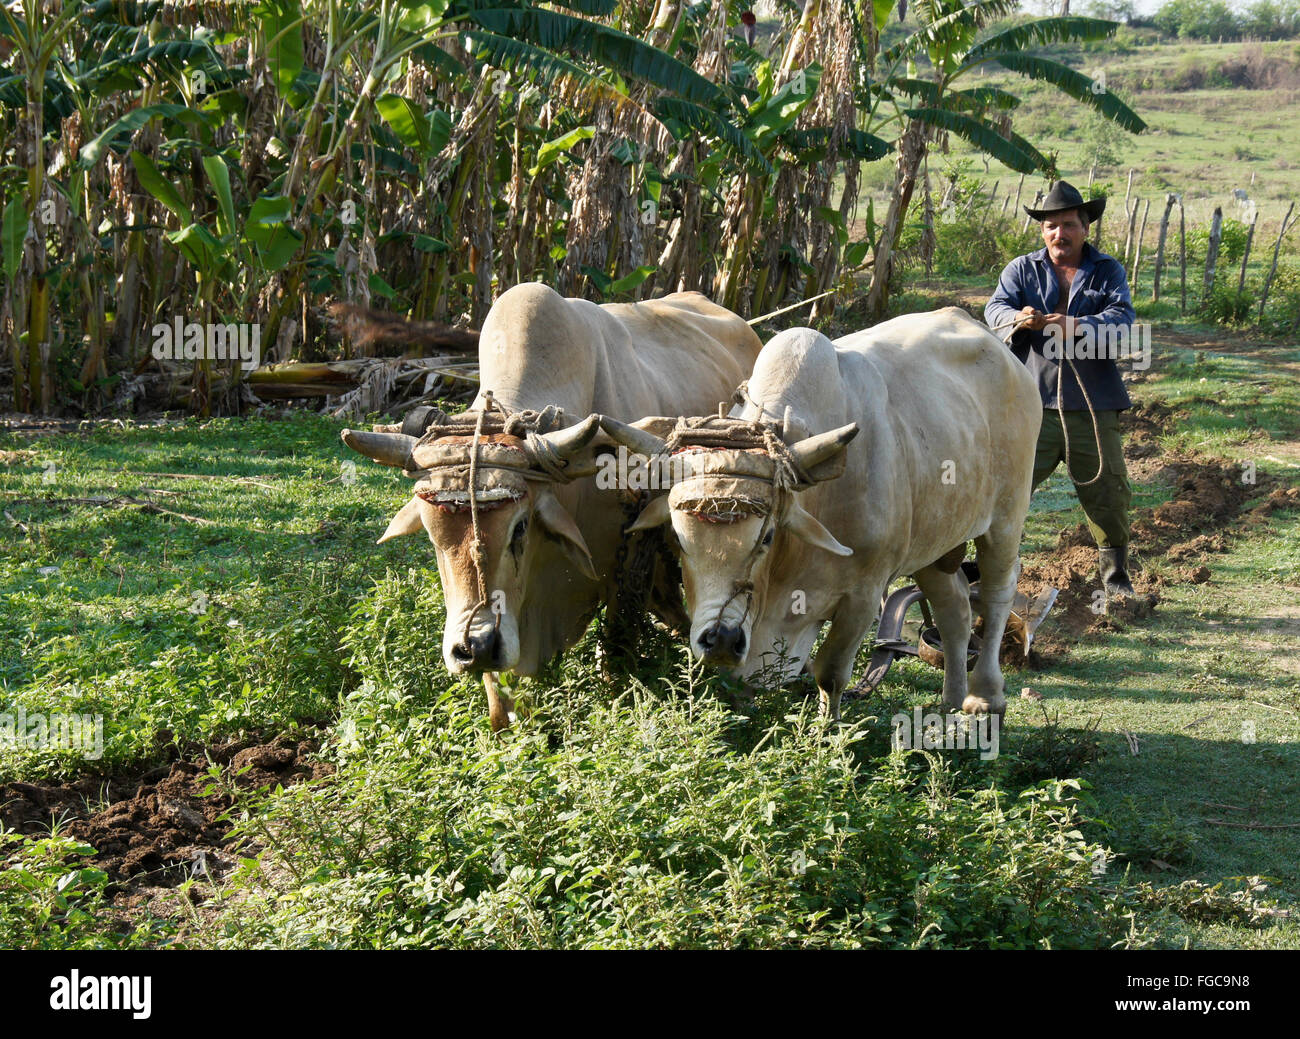 Landwirt Pflügen mit Ochsen, Valle de Los Ingenios (Tal der Zuckerfabriken), Trinidad, Kuba Stockfoto